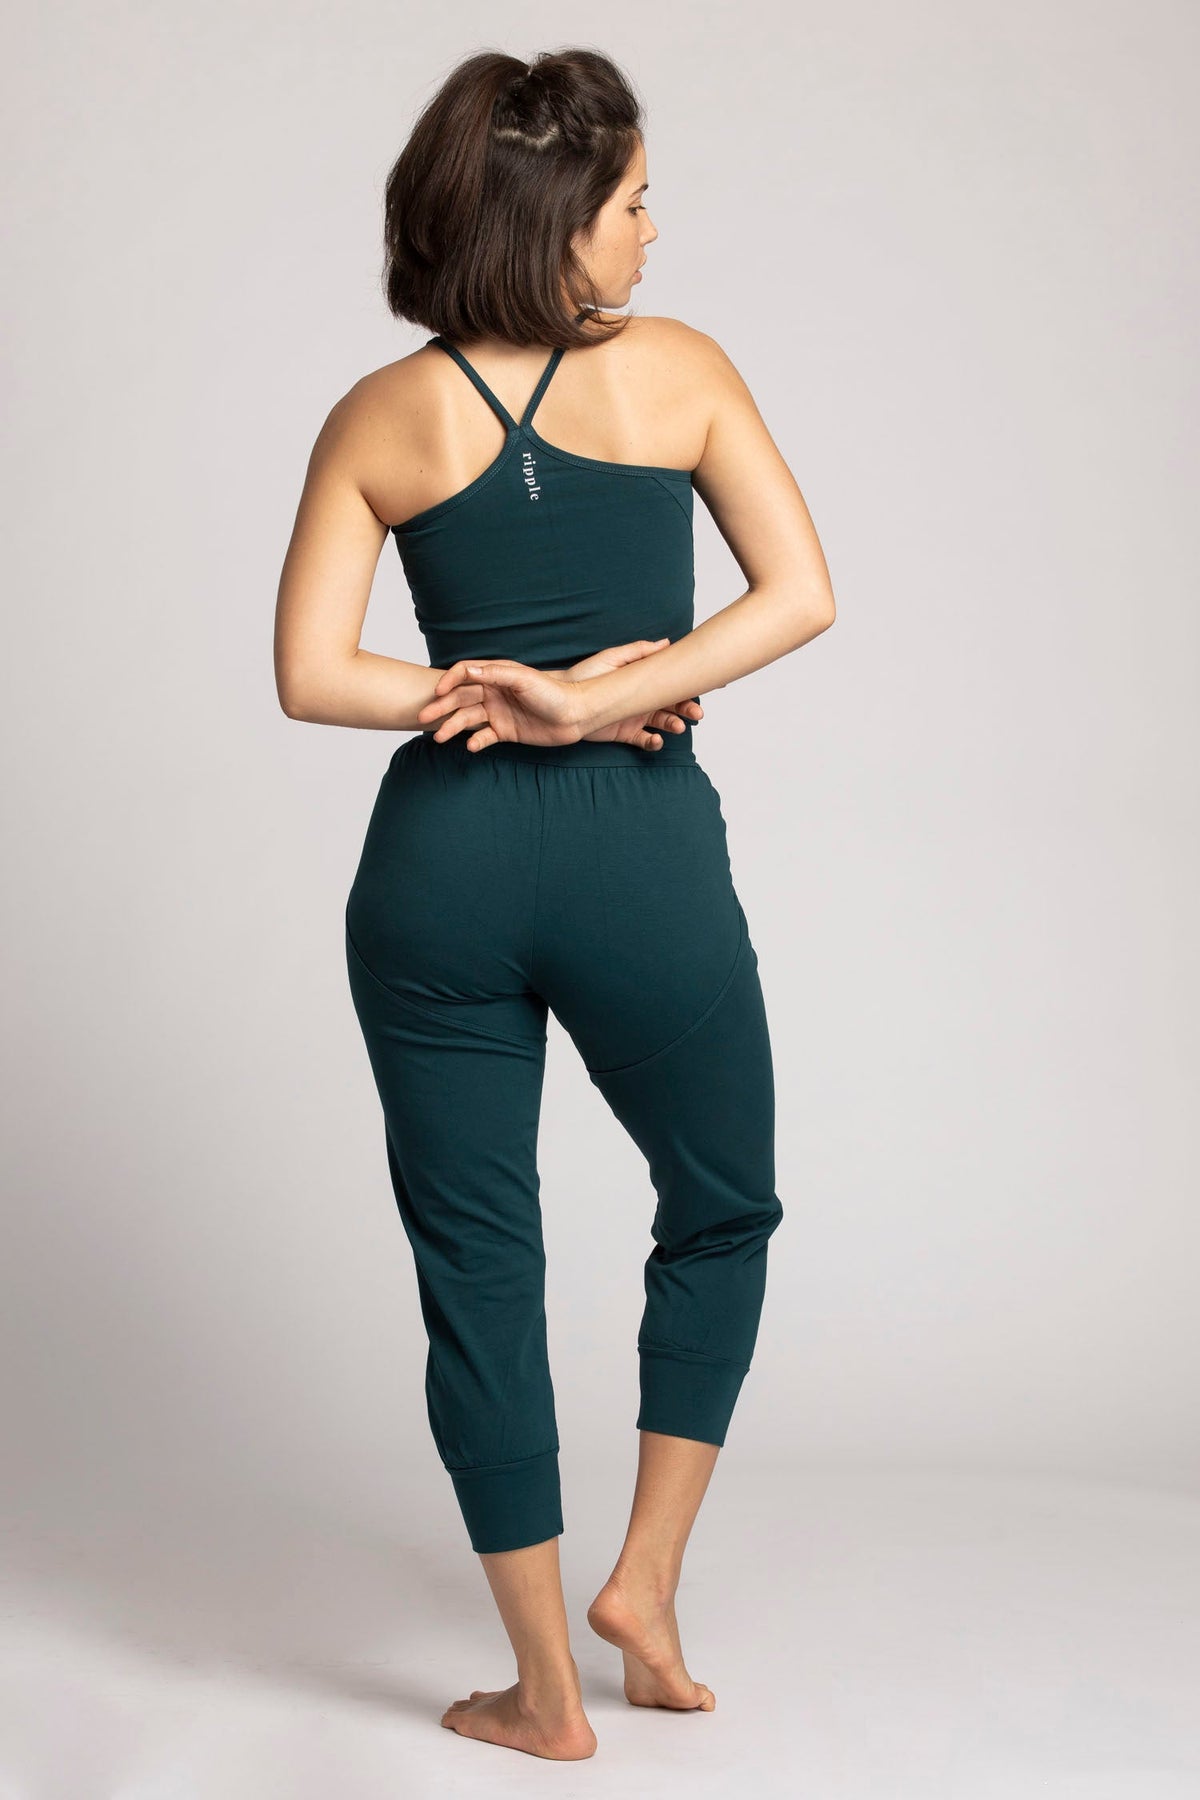 Organic Cotton Yoga Jumpsuit womens clothing Ripple Yoga Wear organic cobalt green S 